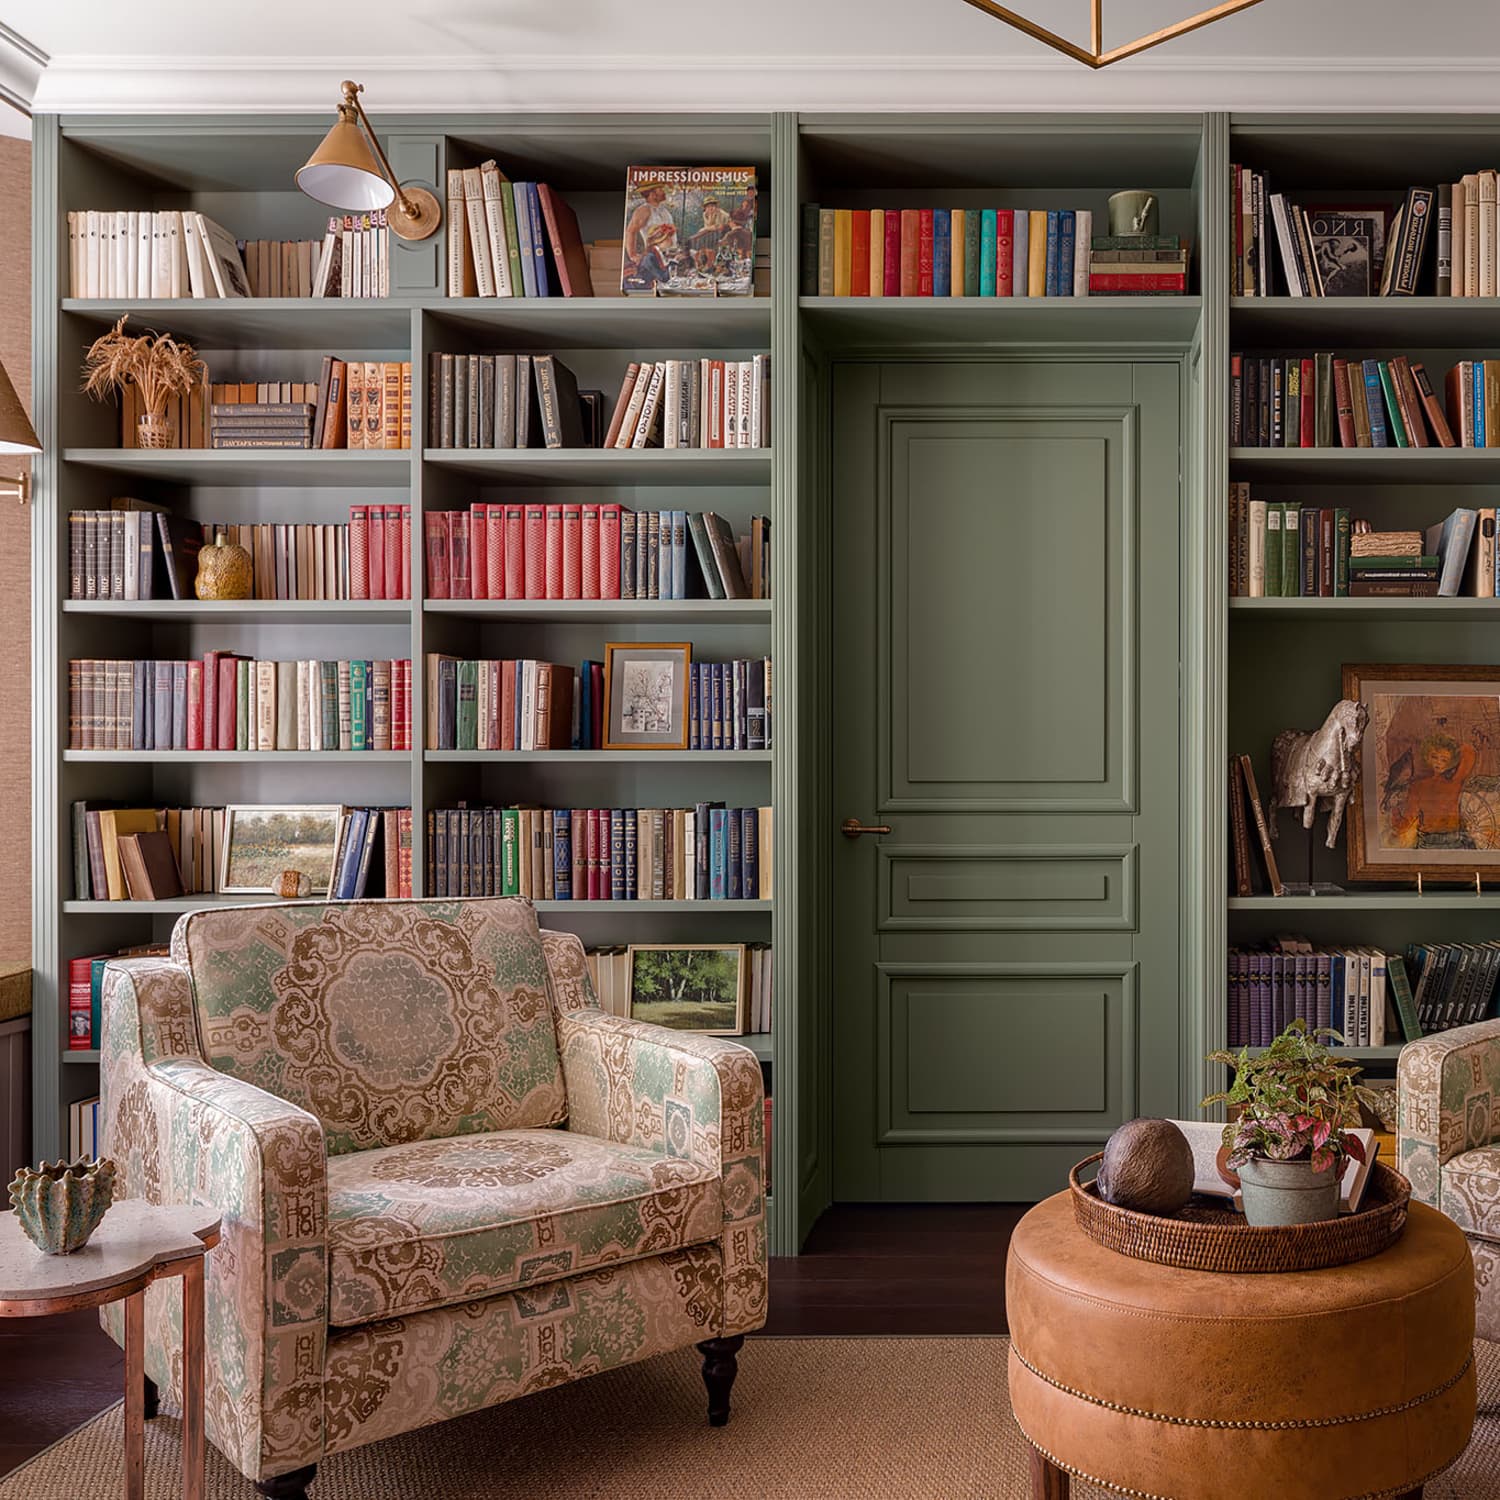 Decorative Books for Home Decor - Set of 3 Beautiful Decor Books